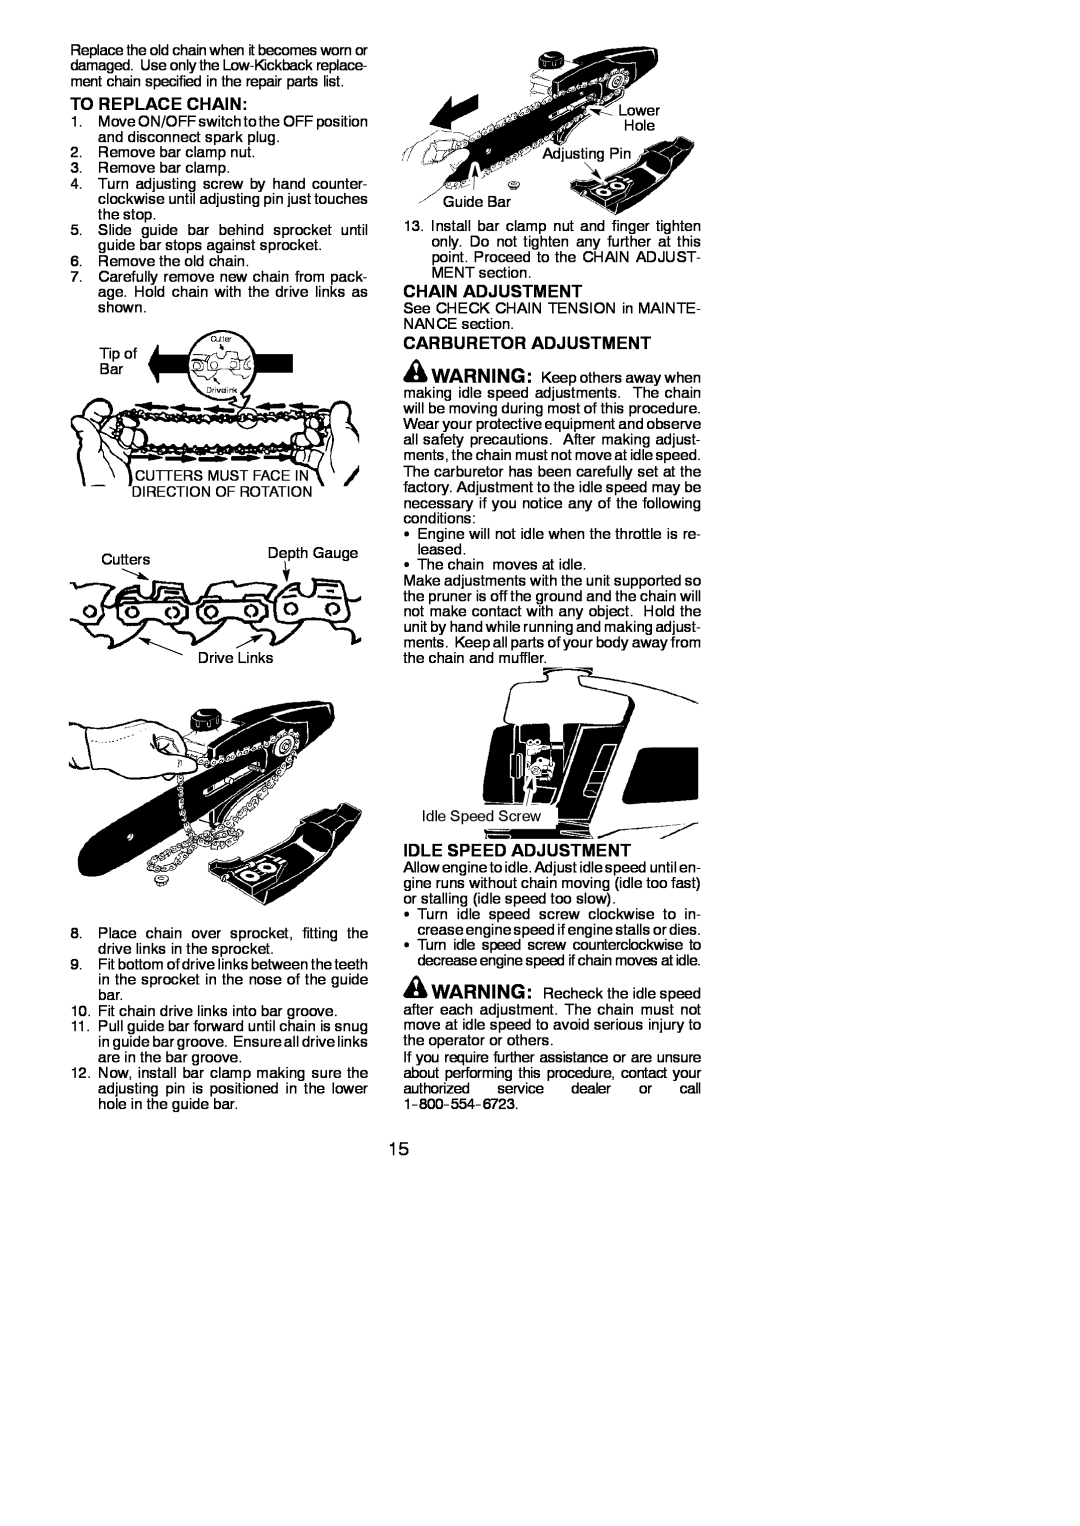 Poulan SM446E instruction manual To Replace Chain, Chain Adjustment, Carburetor Adjustment, Idle Speed Adjustment 